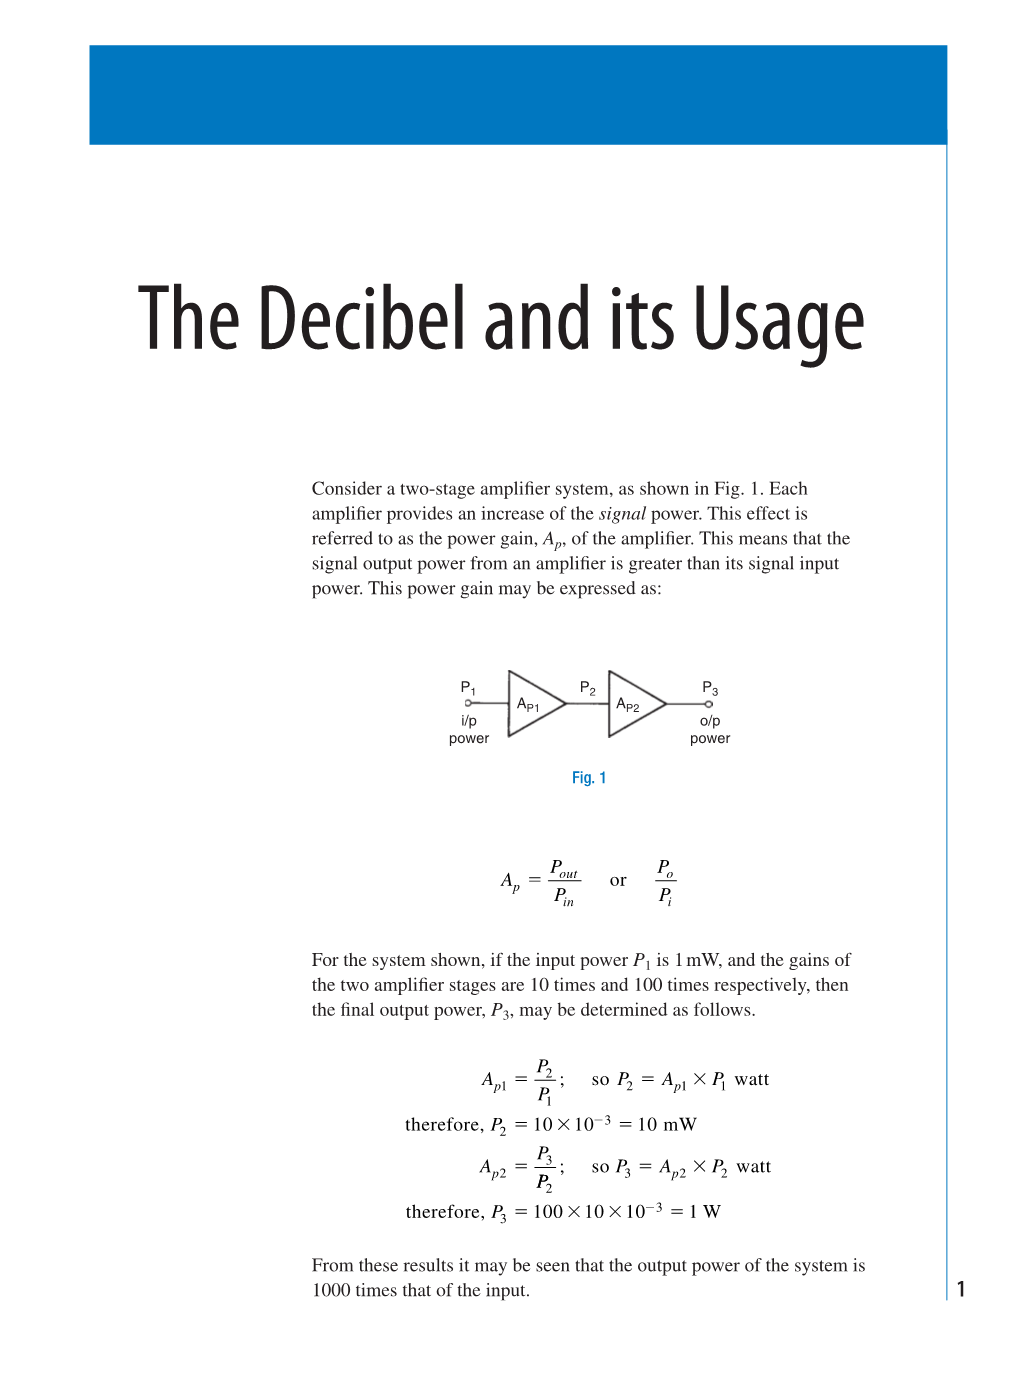 The Decibel and Its Usage